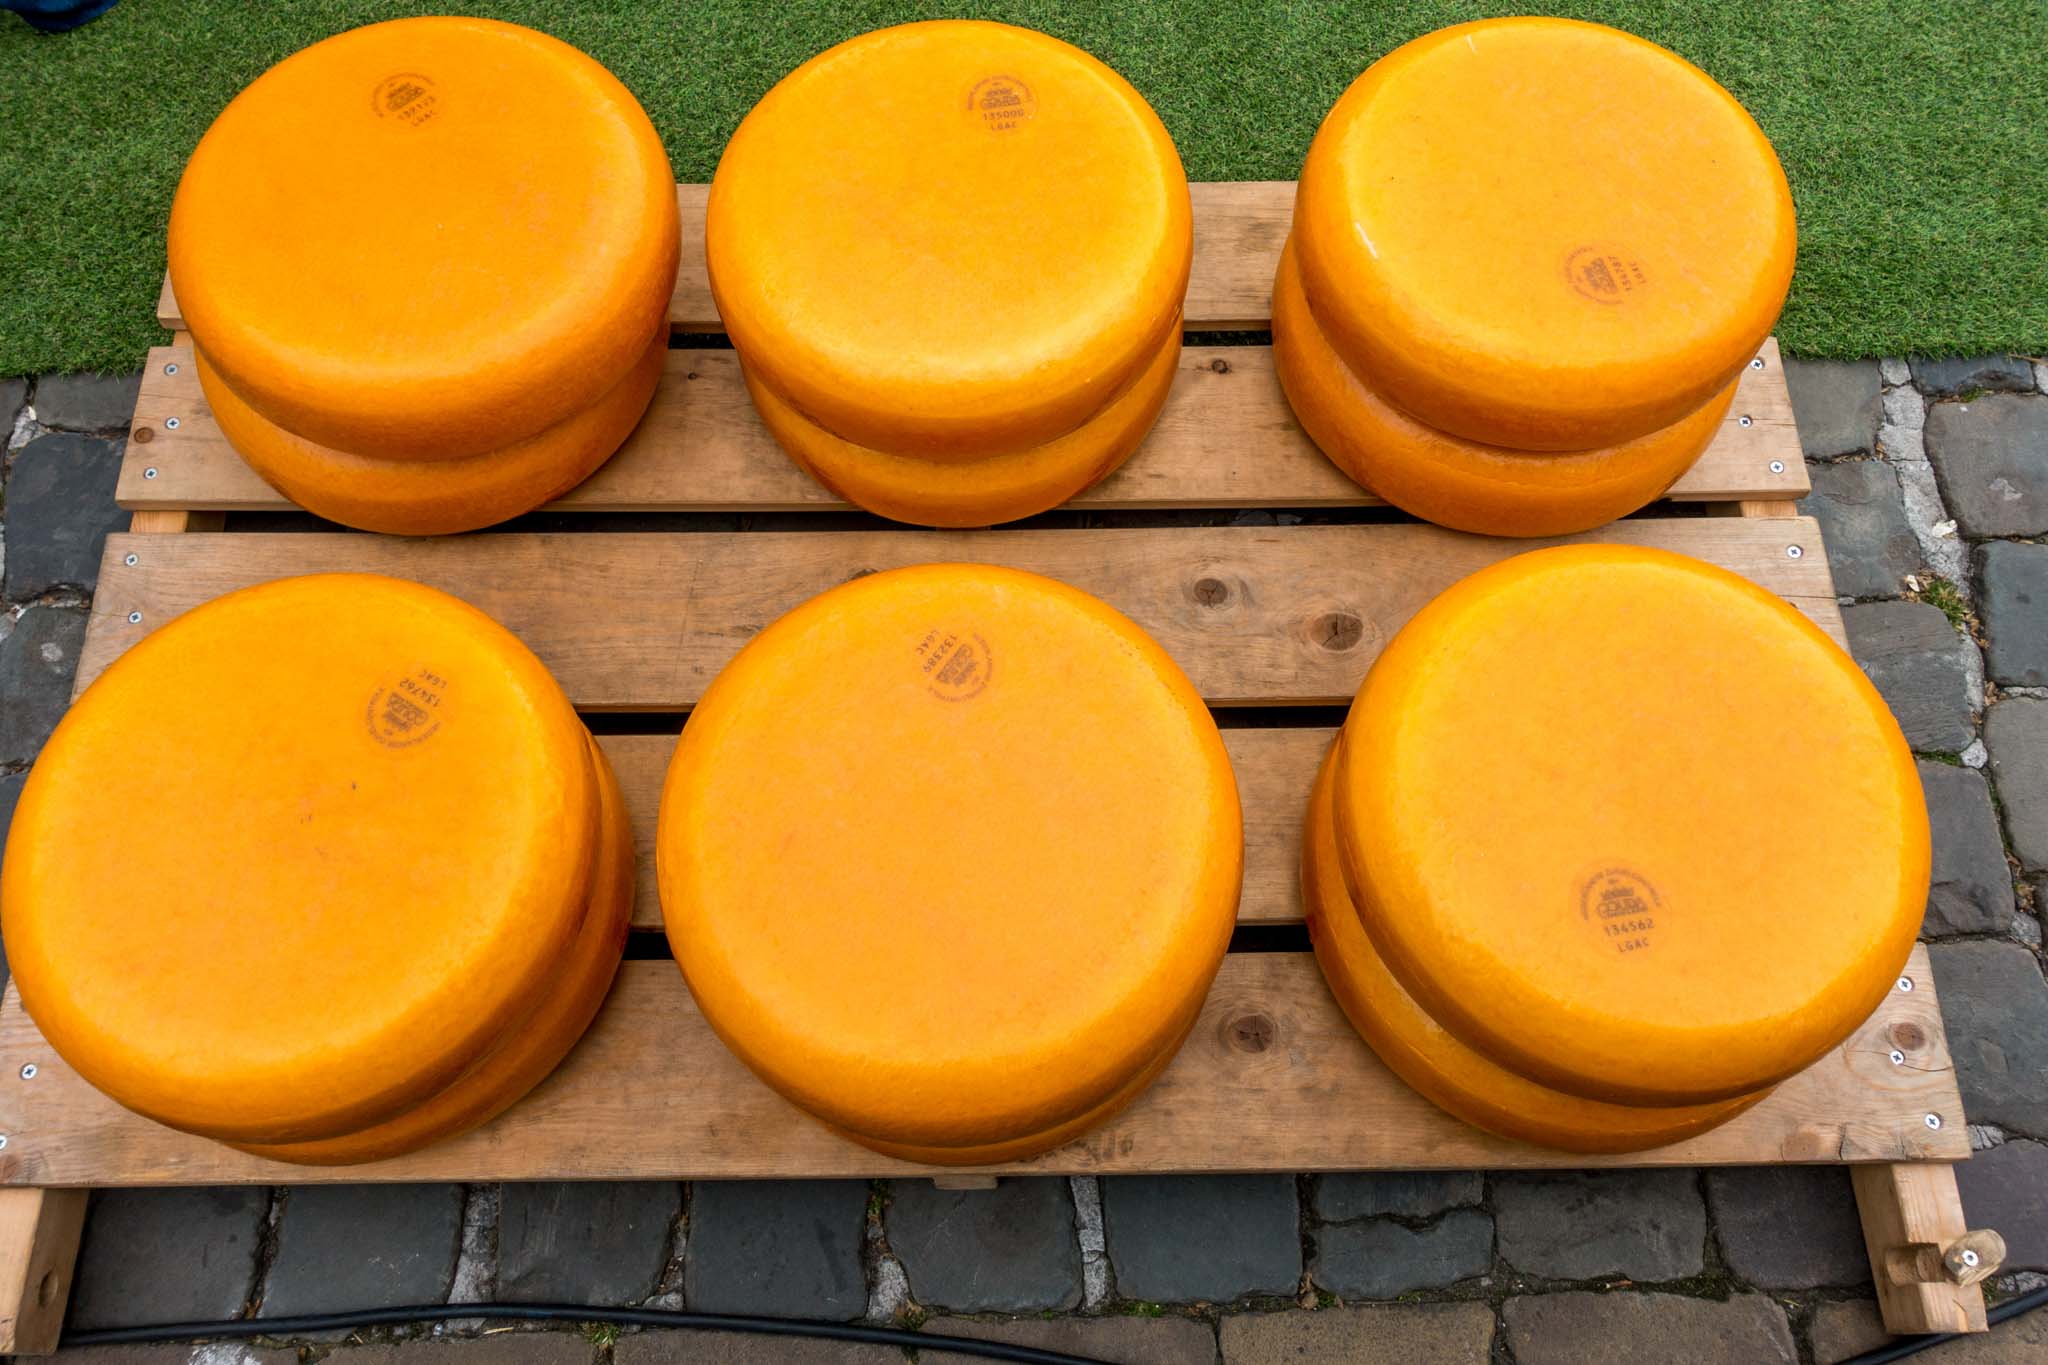 Wheels of orange Gouda cheese